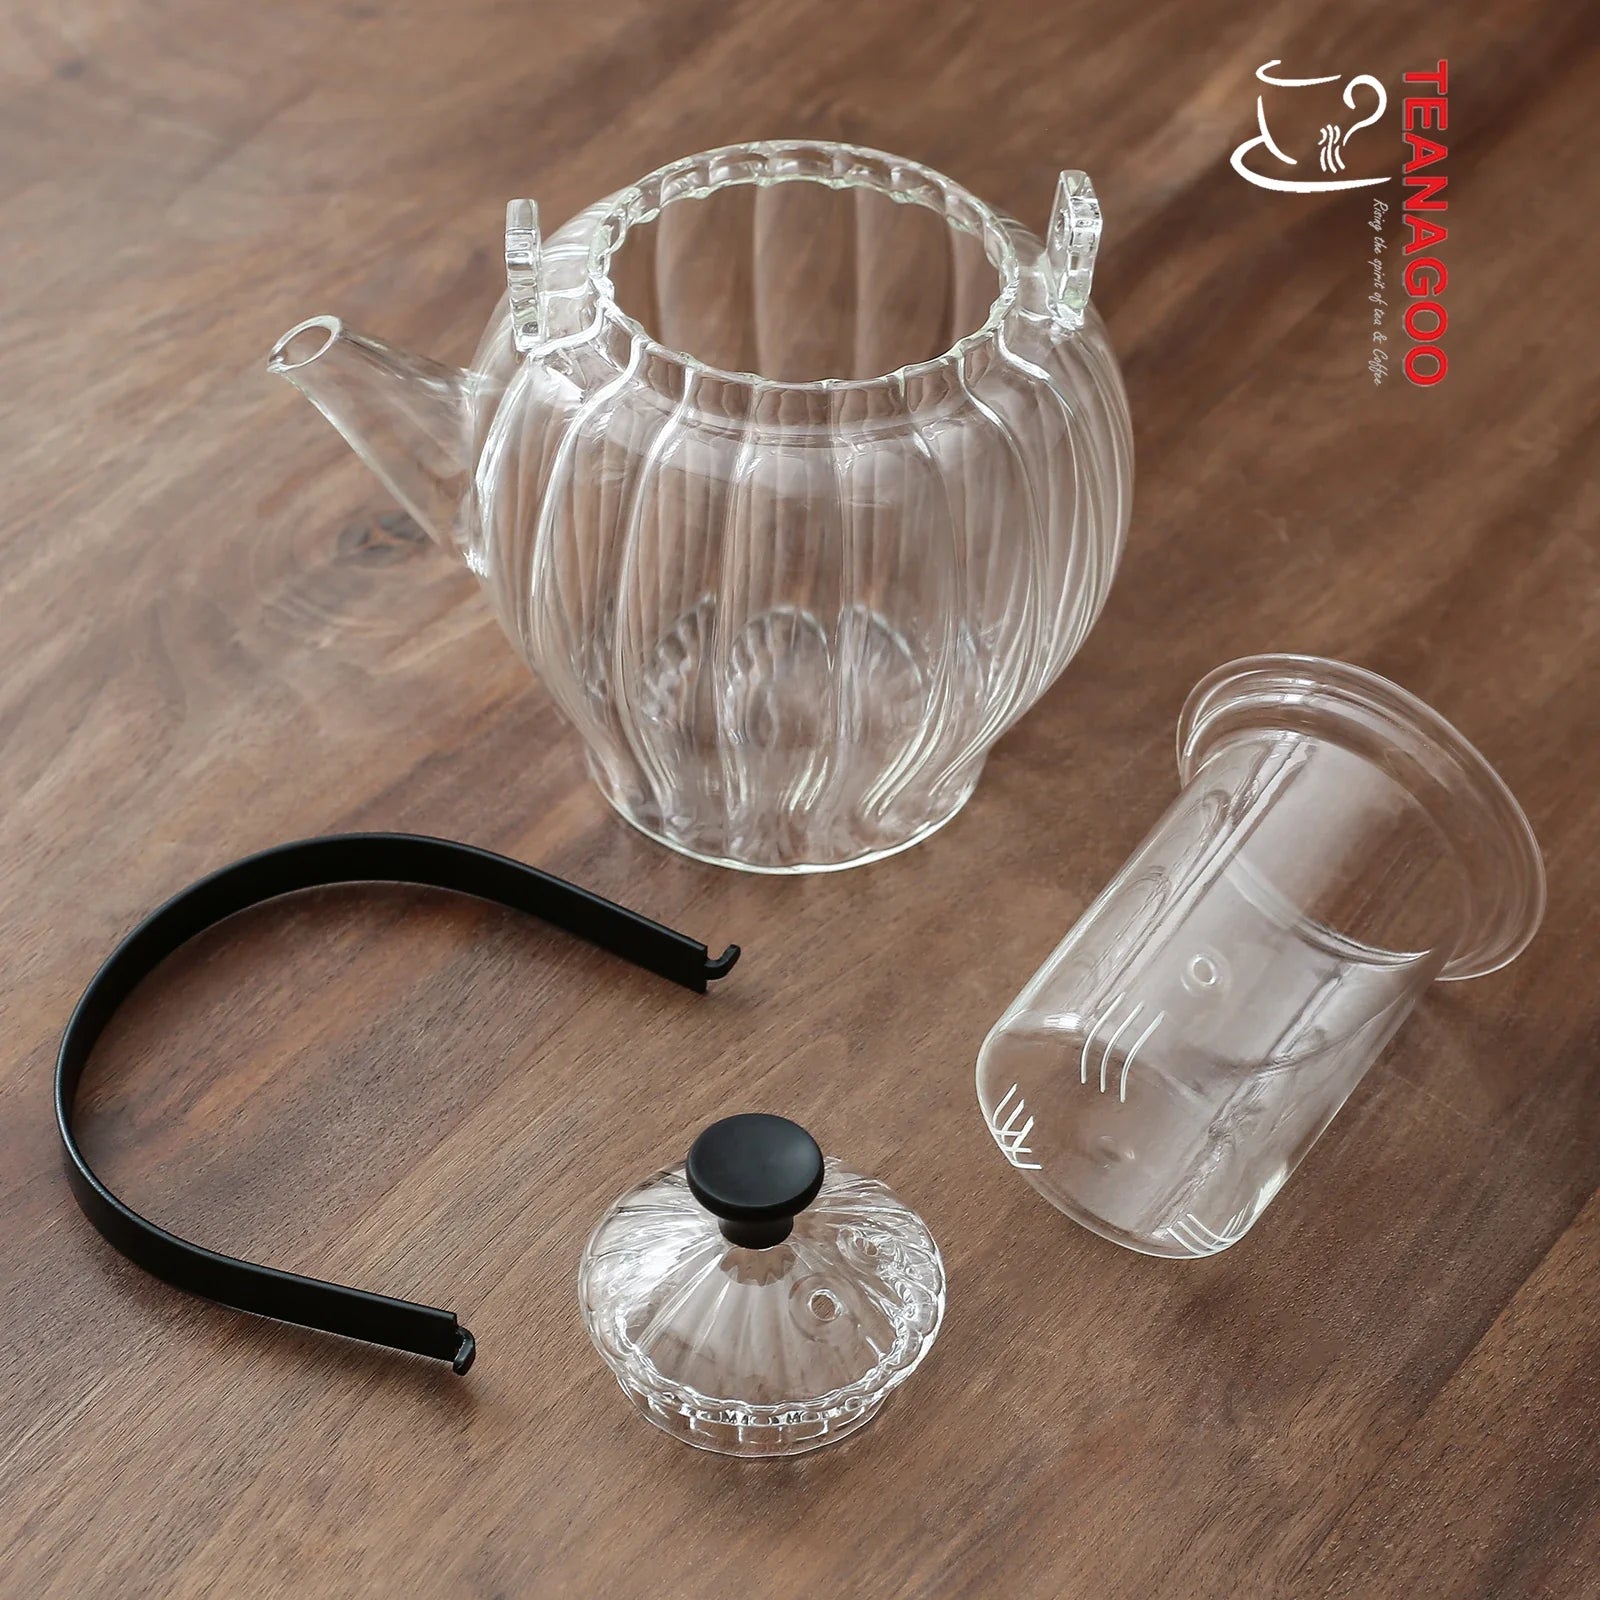 Stovetop & Microwave Safe Borosilicate Glass Teapot 20 Fl. Oz